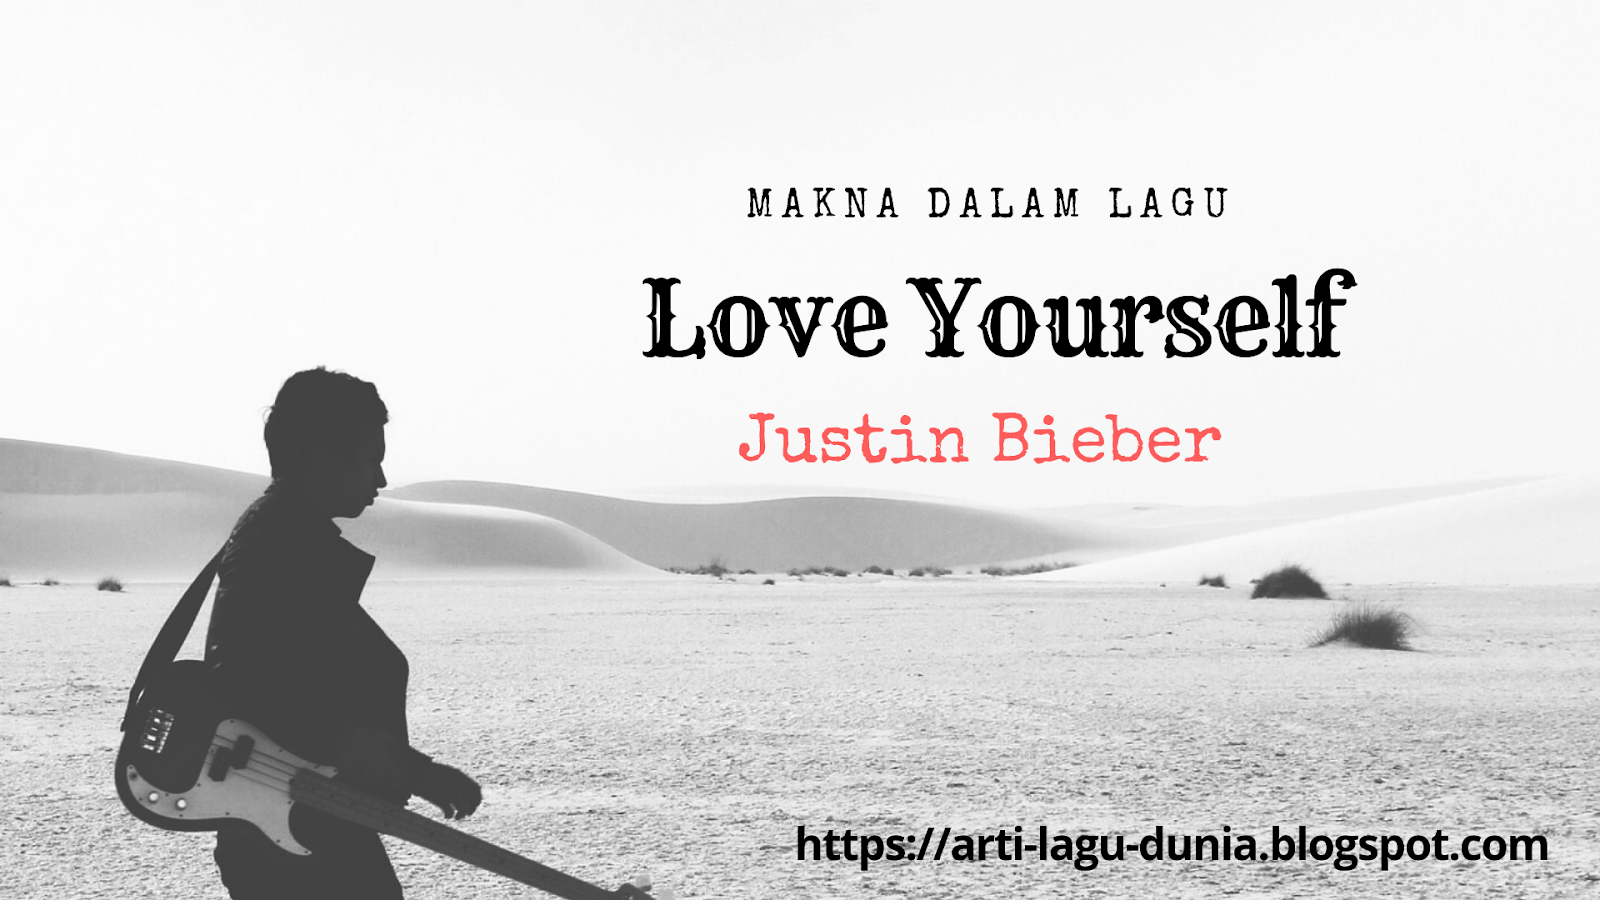 Love yourself текст. Бибер Love yourself. Justin Bieber Love yourself. Love yourself Justin Bieber текст. Love yourself Justin Bieber Ноты.